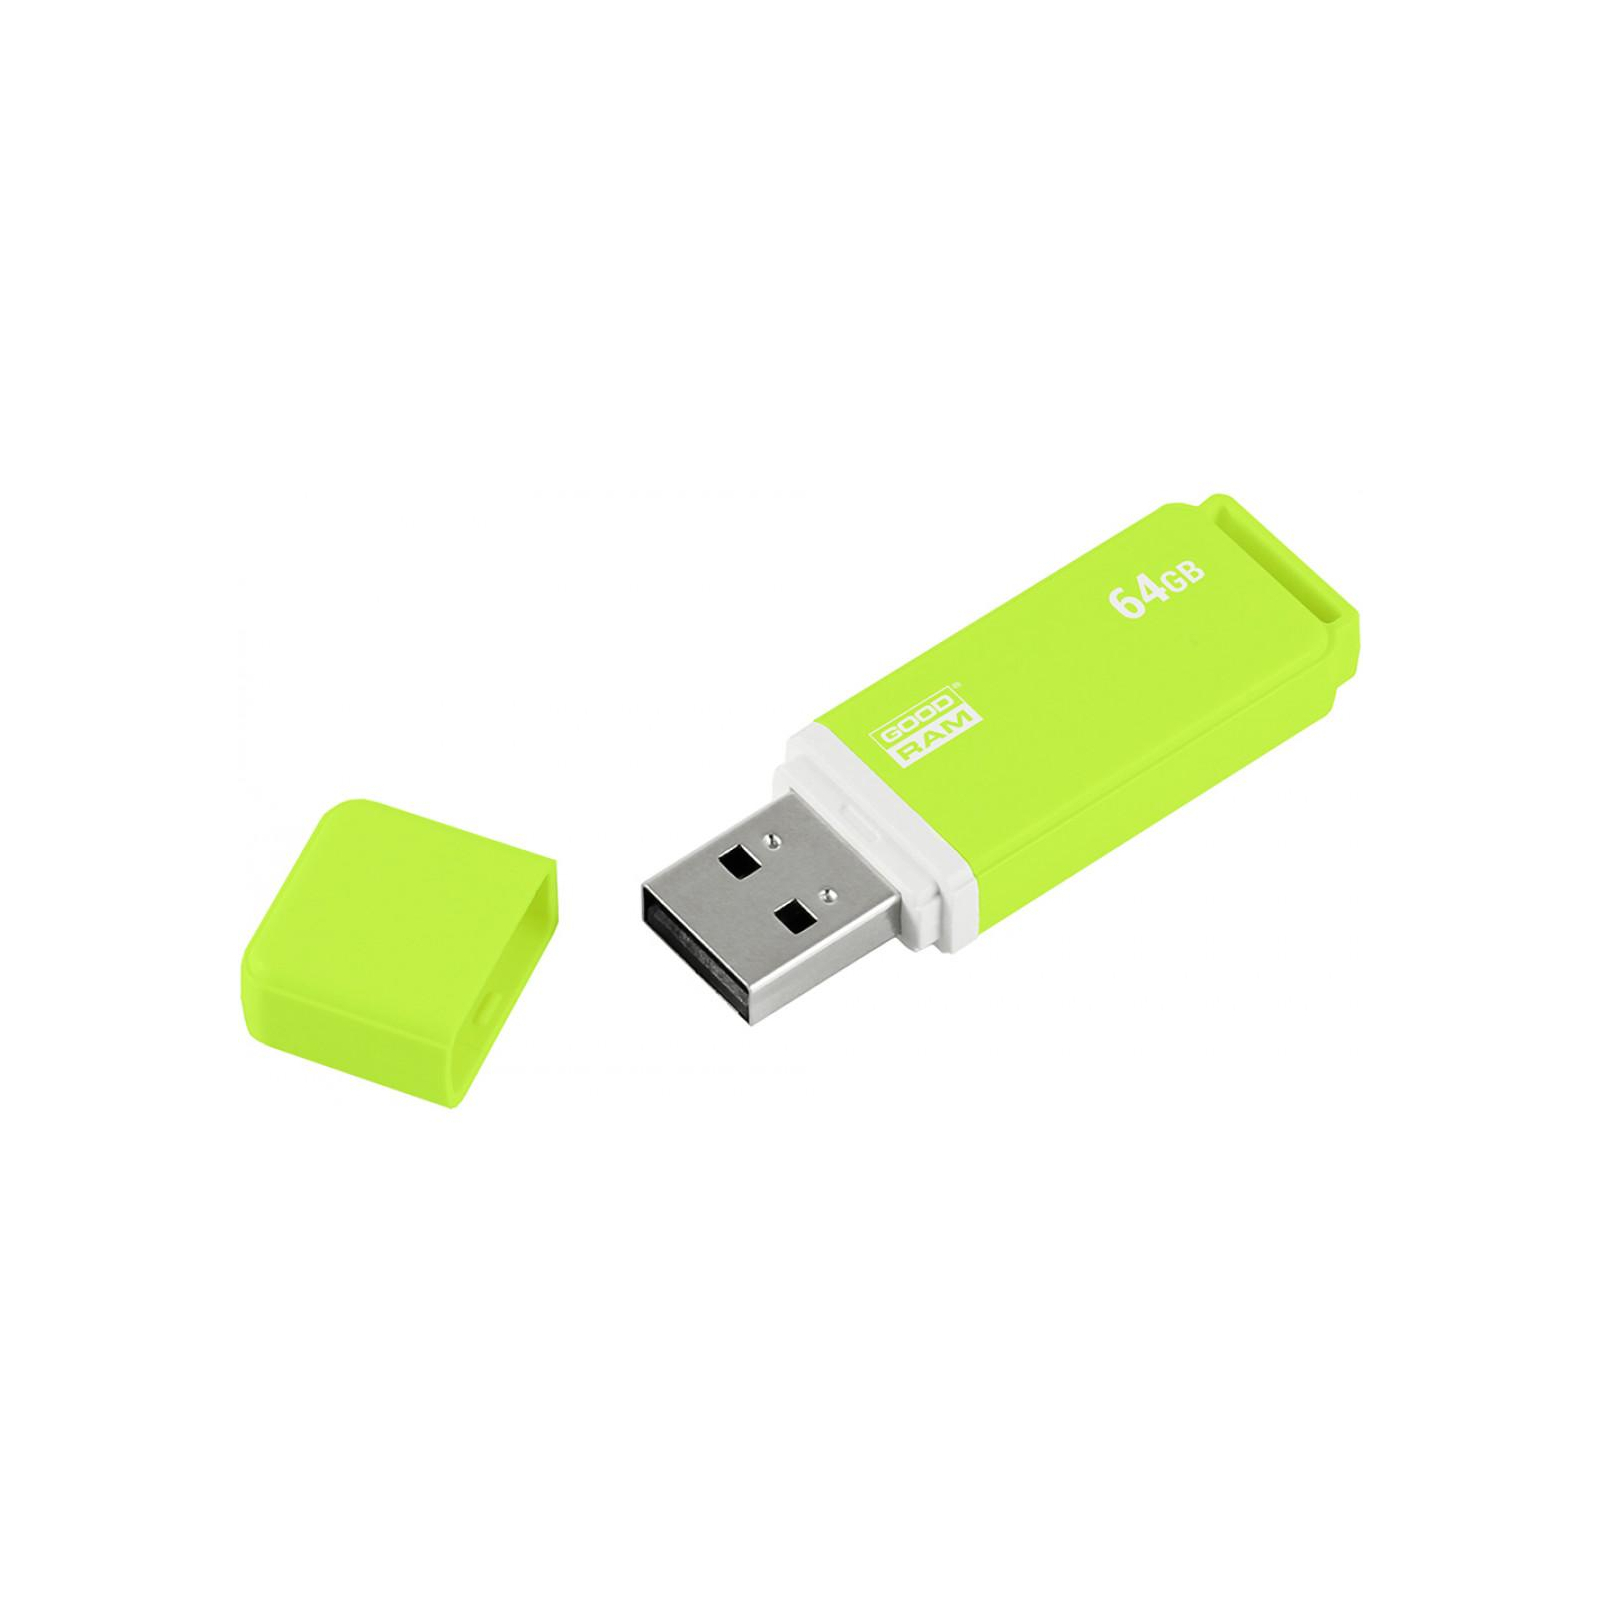 USB флеш накопитель Goodram 16GB UMO2 Green USB 2.0 (UMO2-0160G0R11) изображение 3